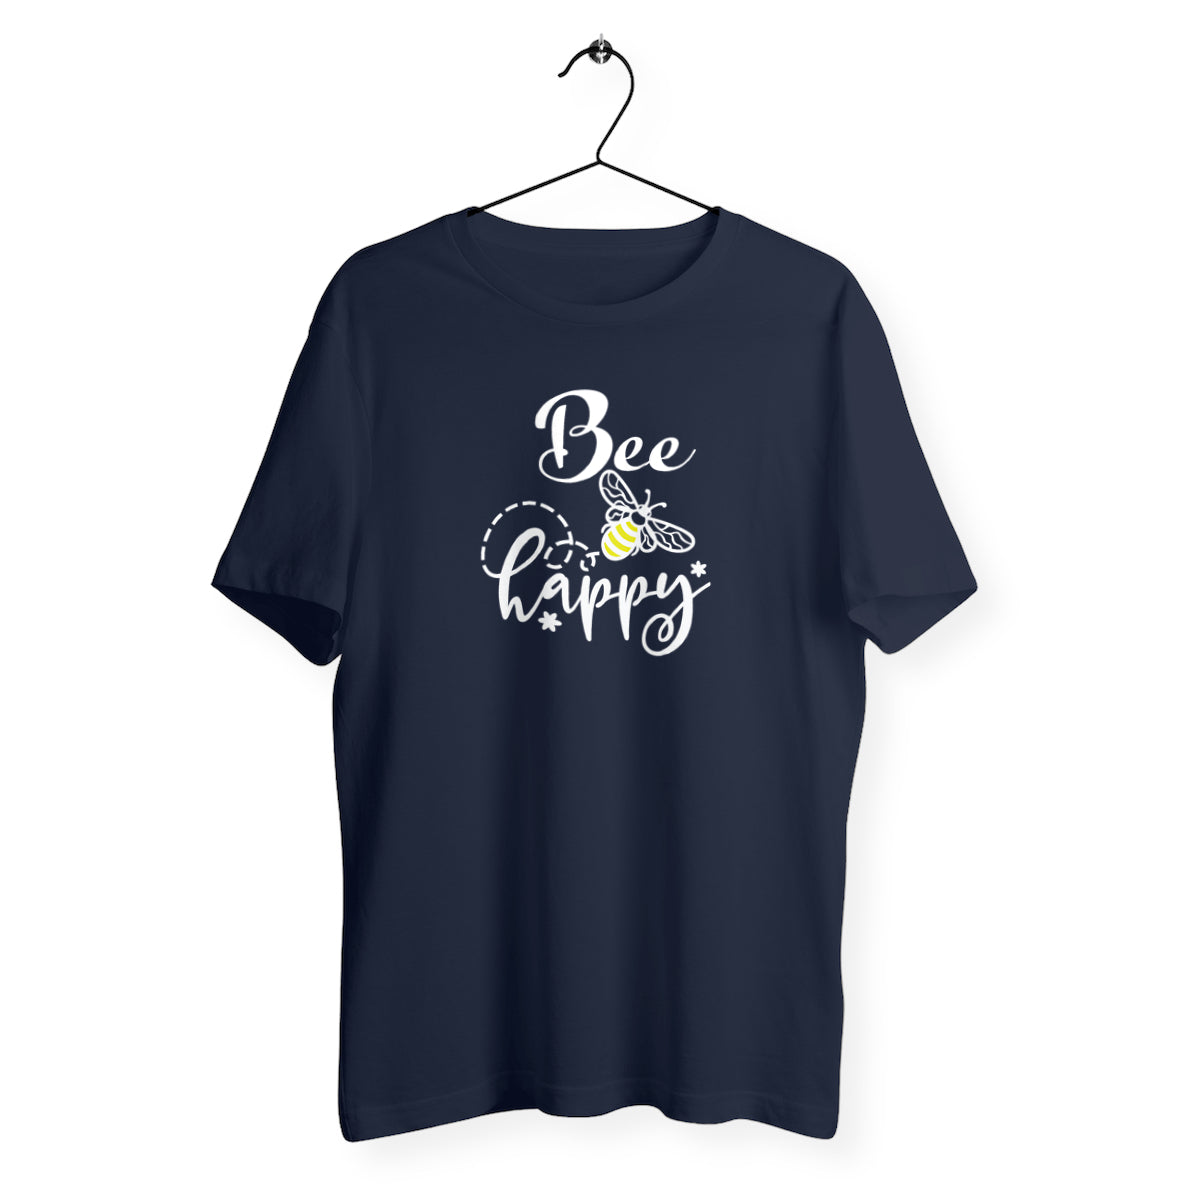 T-Shirt Mixte Bio - Bee Happy (blanc), t-shirt bio mixte Bee Happy de t-franch, t-shirt bee happy, t-shirt abeille en coton bio, tee shirt mixte jeux de mots, t-shirt be happy avec guêpe, t-shirt homme et femme bee happy, t-shirt bee happy bleu